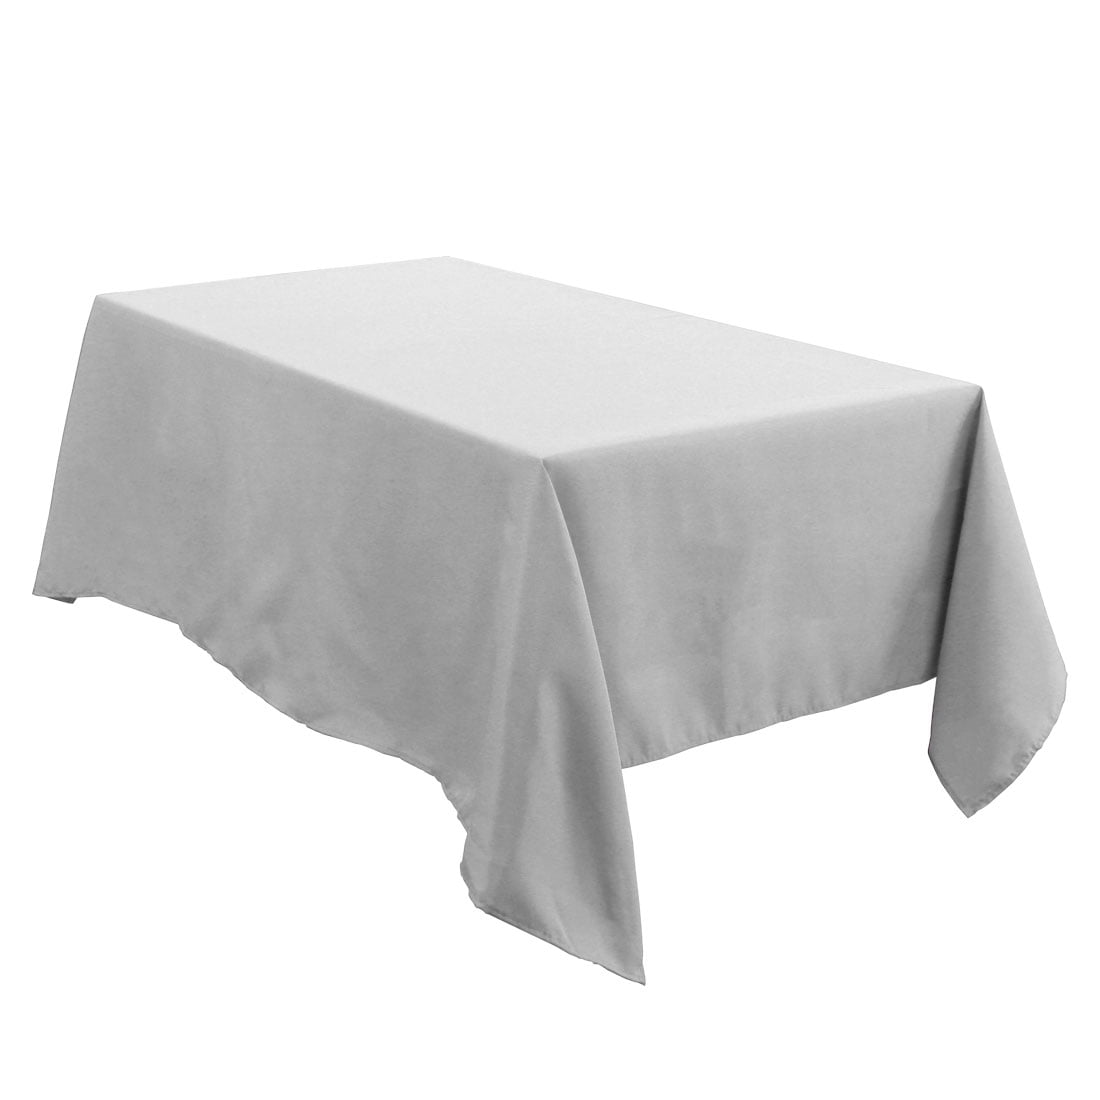 Table Protector Alamo - Tablecloths World